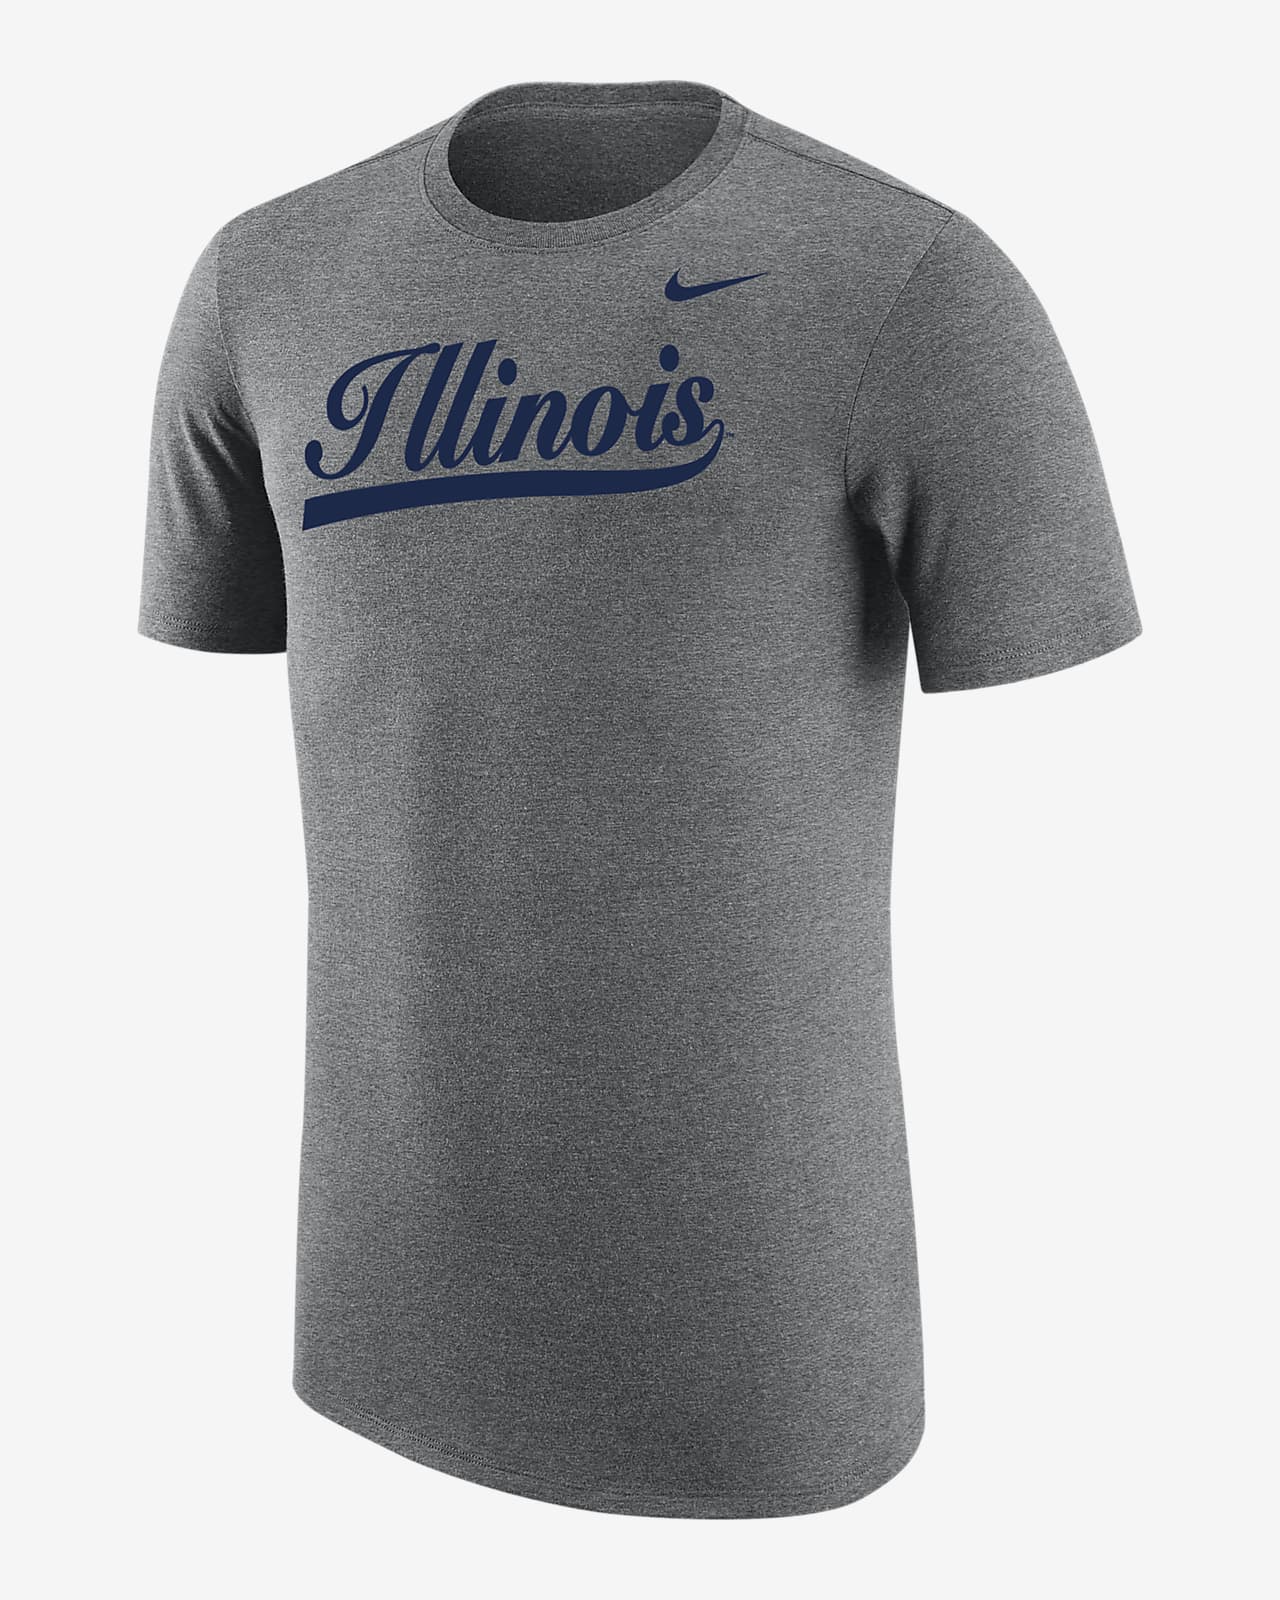 Playera universitaria Nike para hombre de Illinois